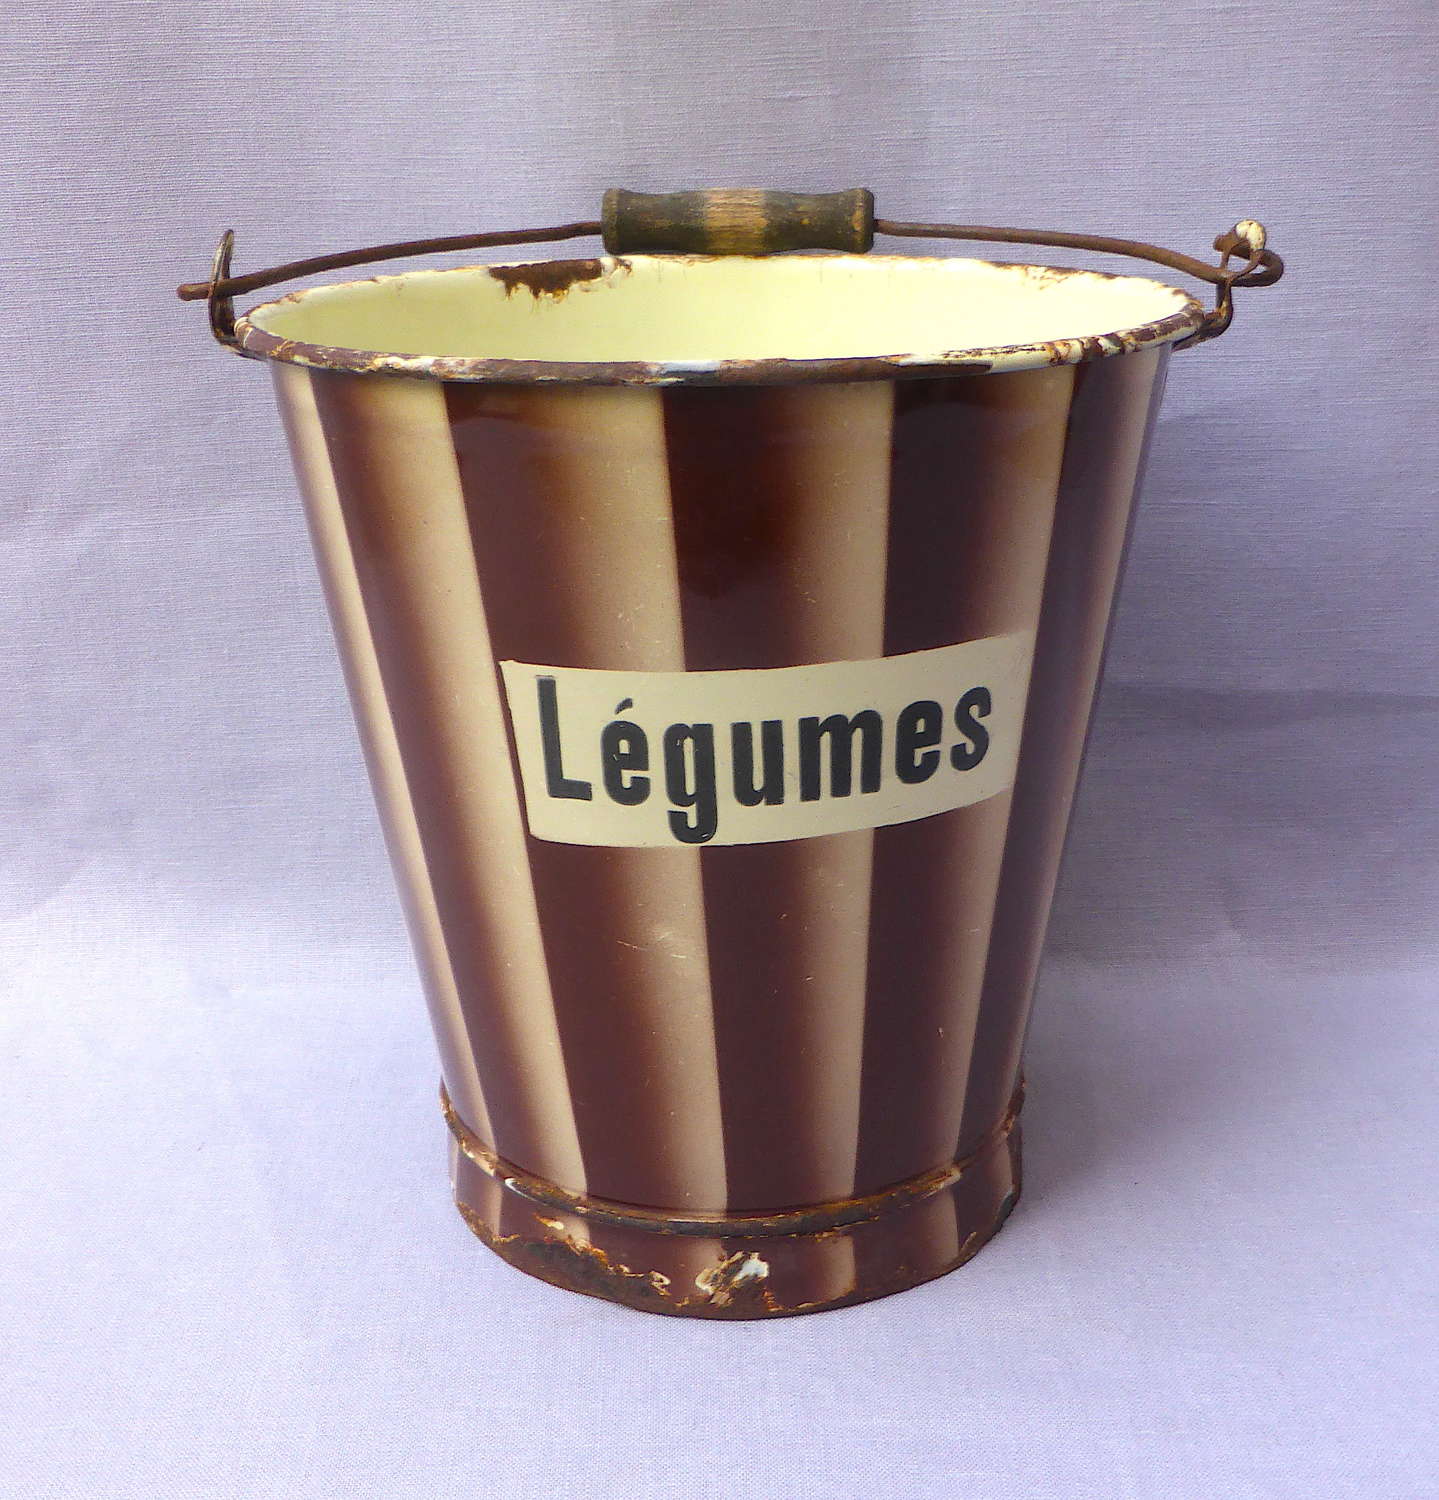 1930s French enamelware légumes bucket